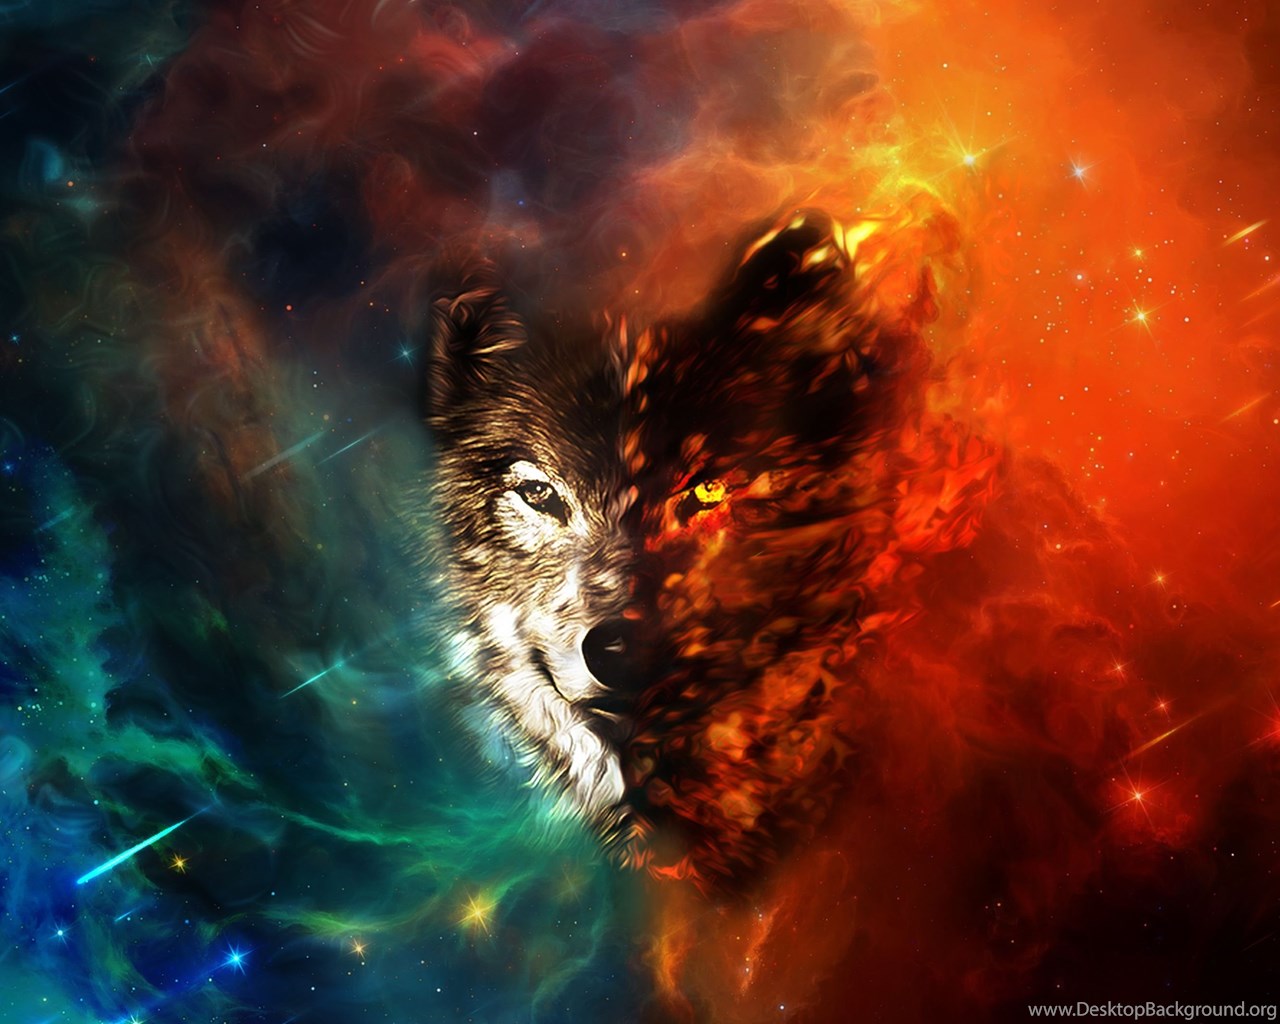 Top Space Wolf Wallpaper Images For Pinterest Desktop Background